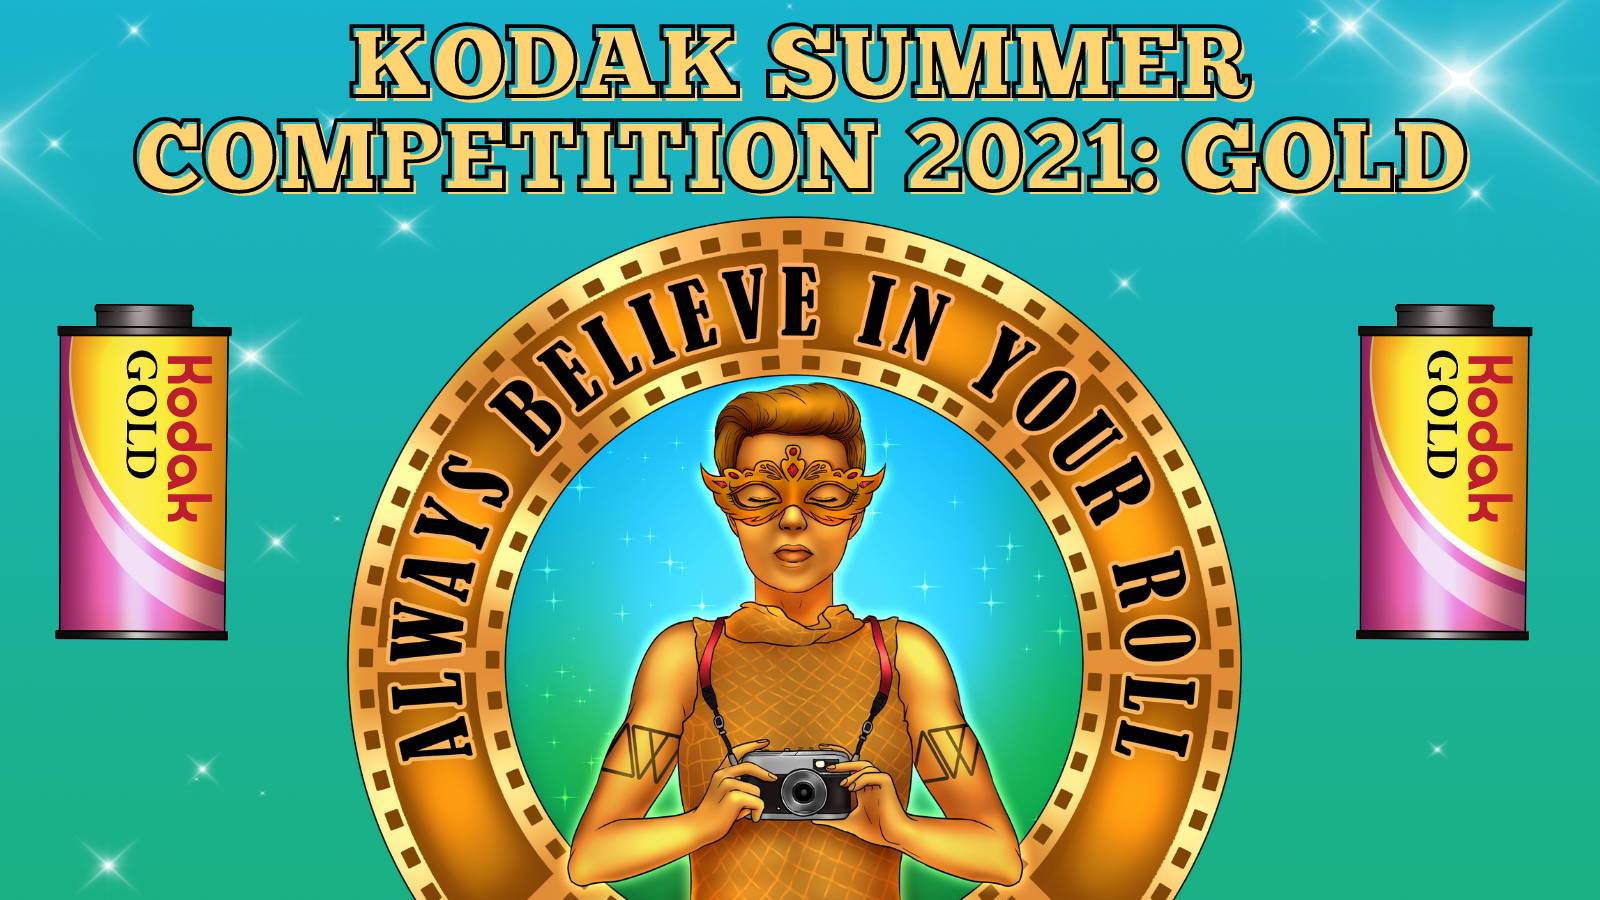 Kodak Summer Competition 2021: GOLD! - Analogue Wonderland